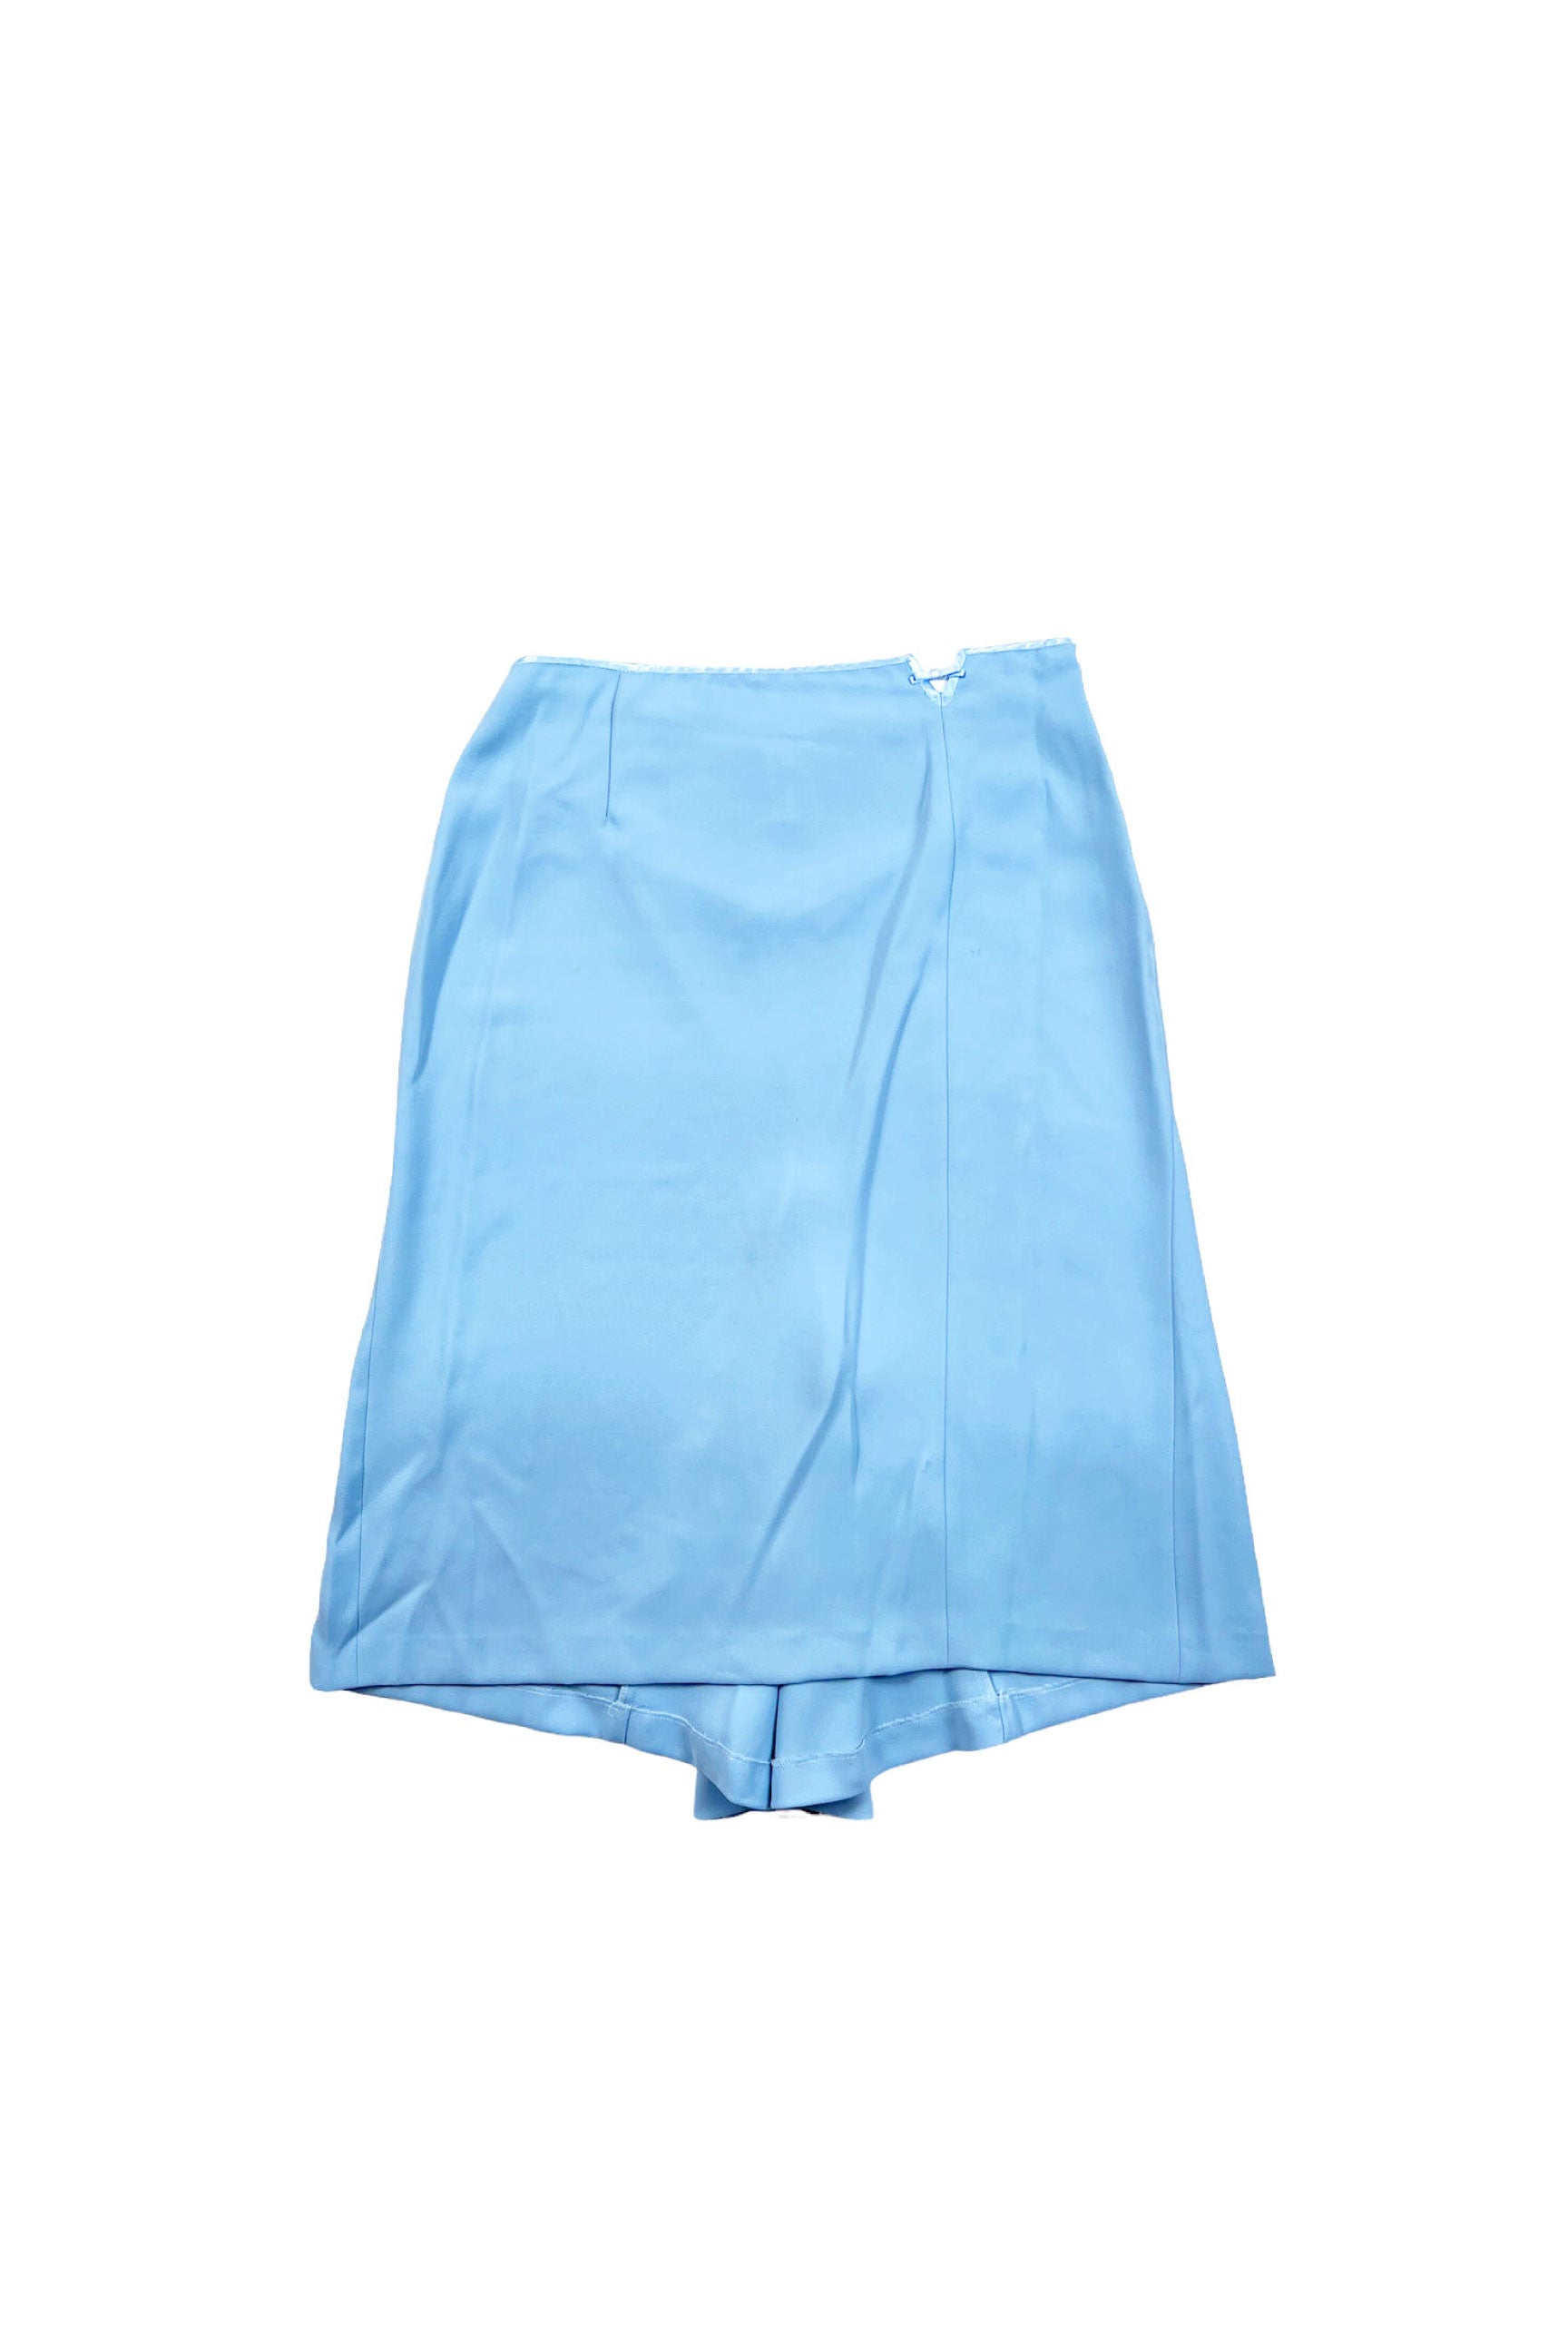 Made in ITALY ANNA MOLINARI skirt – ReSCOUNT STORE